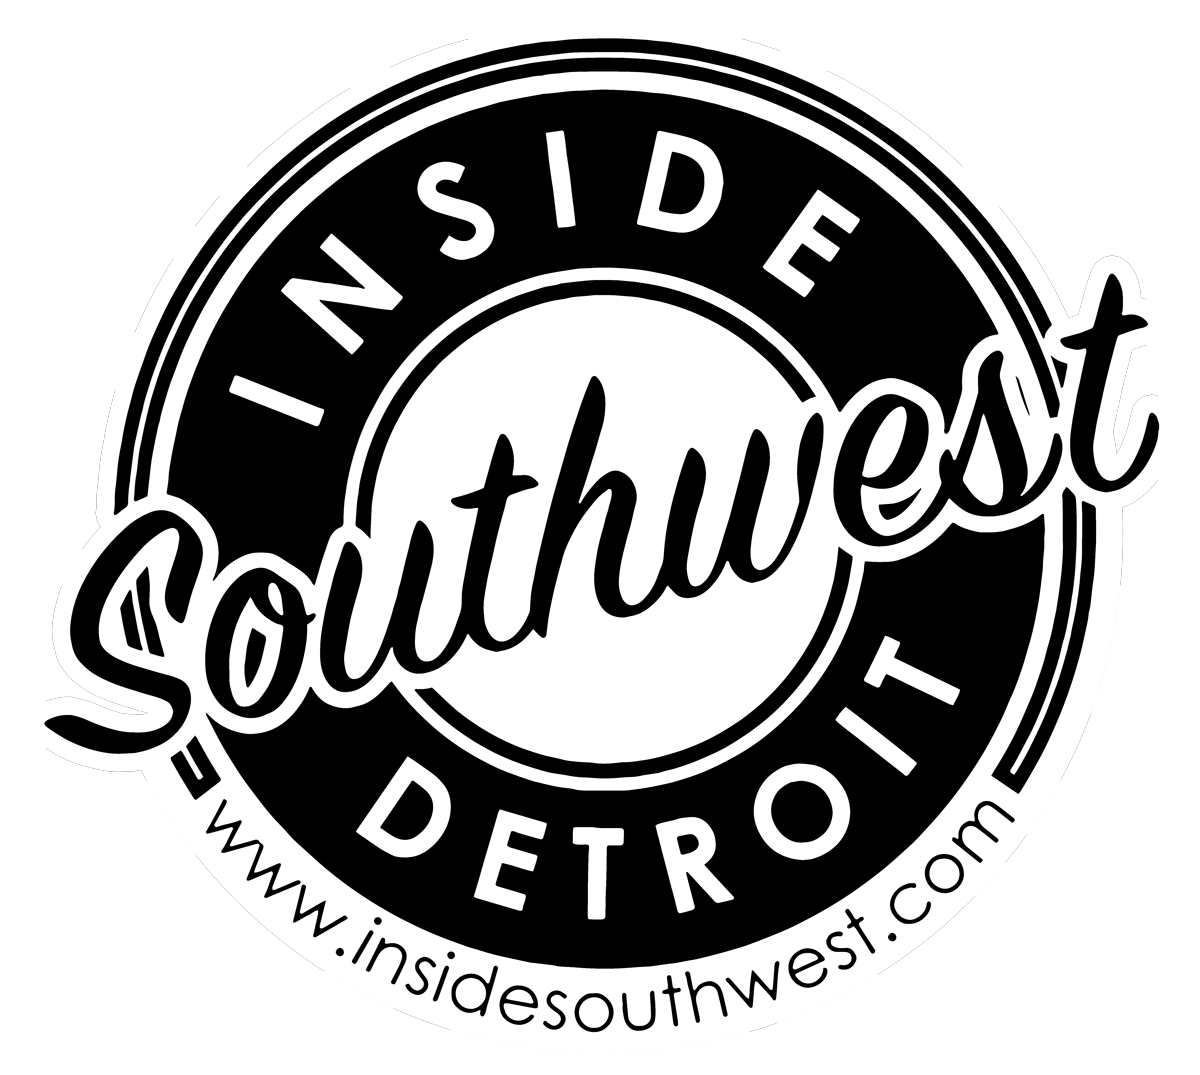 Inside Southwest Detroit